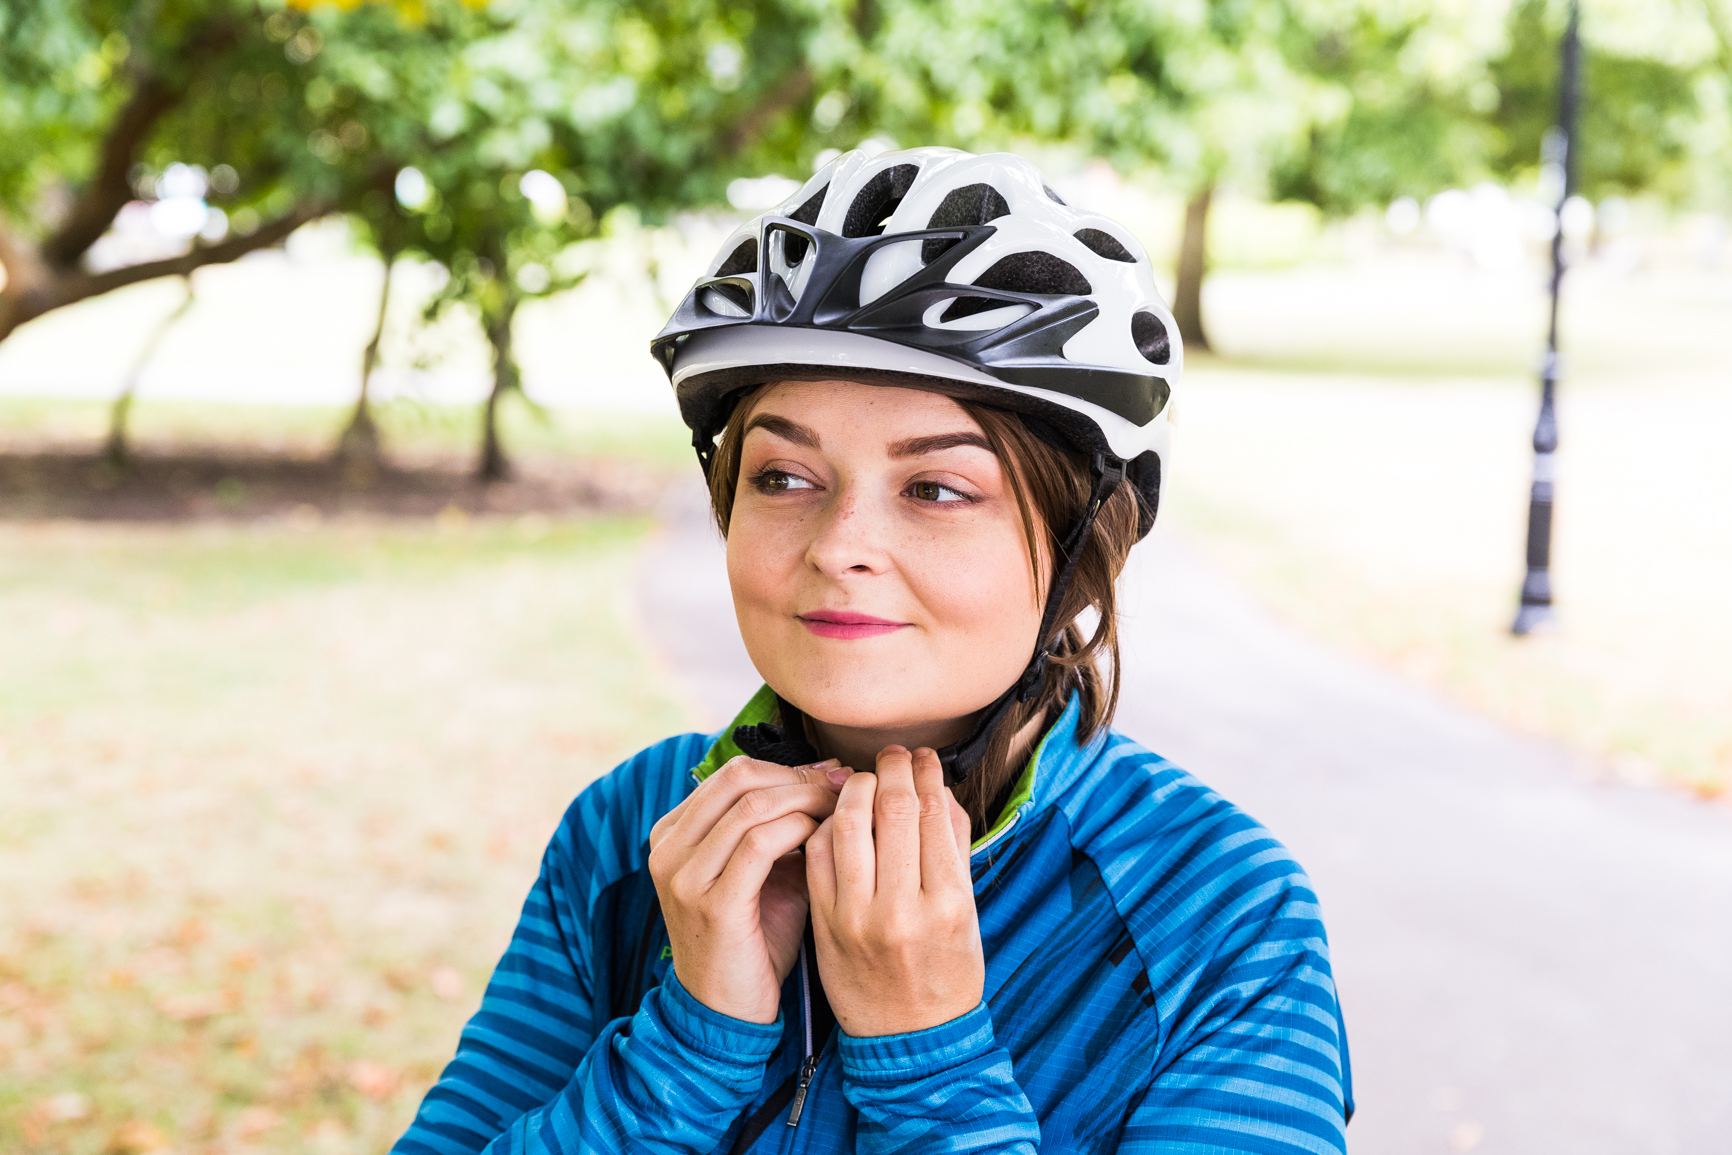 Woman cyclist clipping helmet